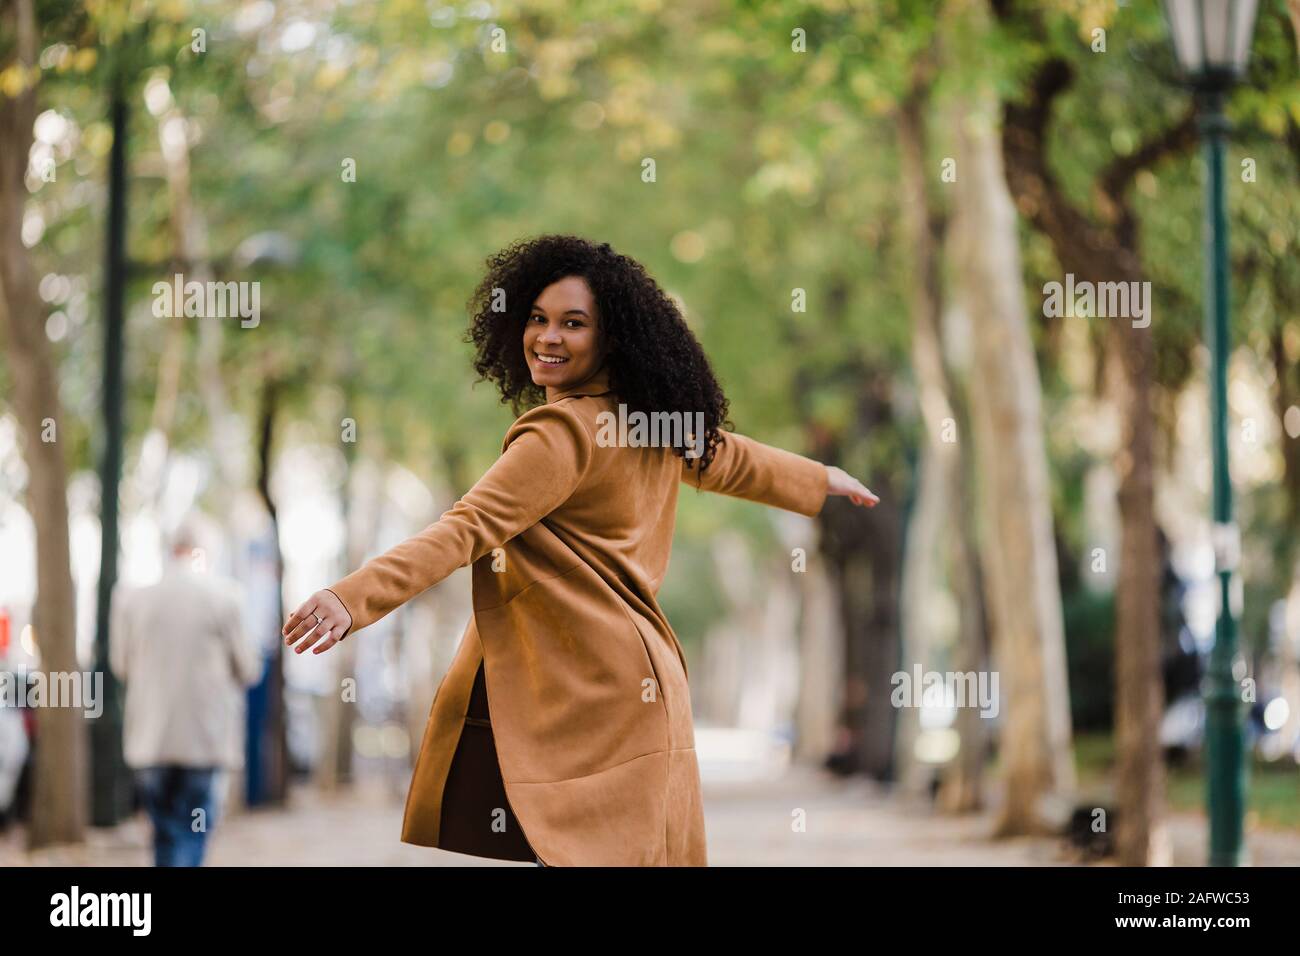 Portrait carefree young woman dancing on treelined sidewalk Stock Photo